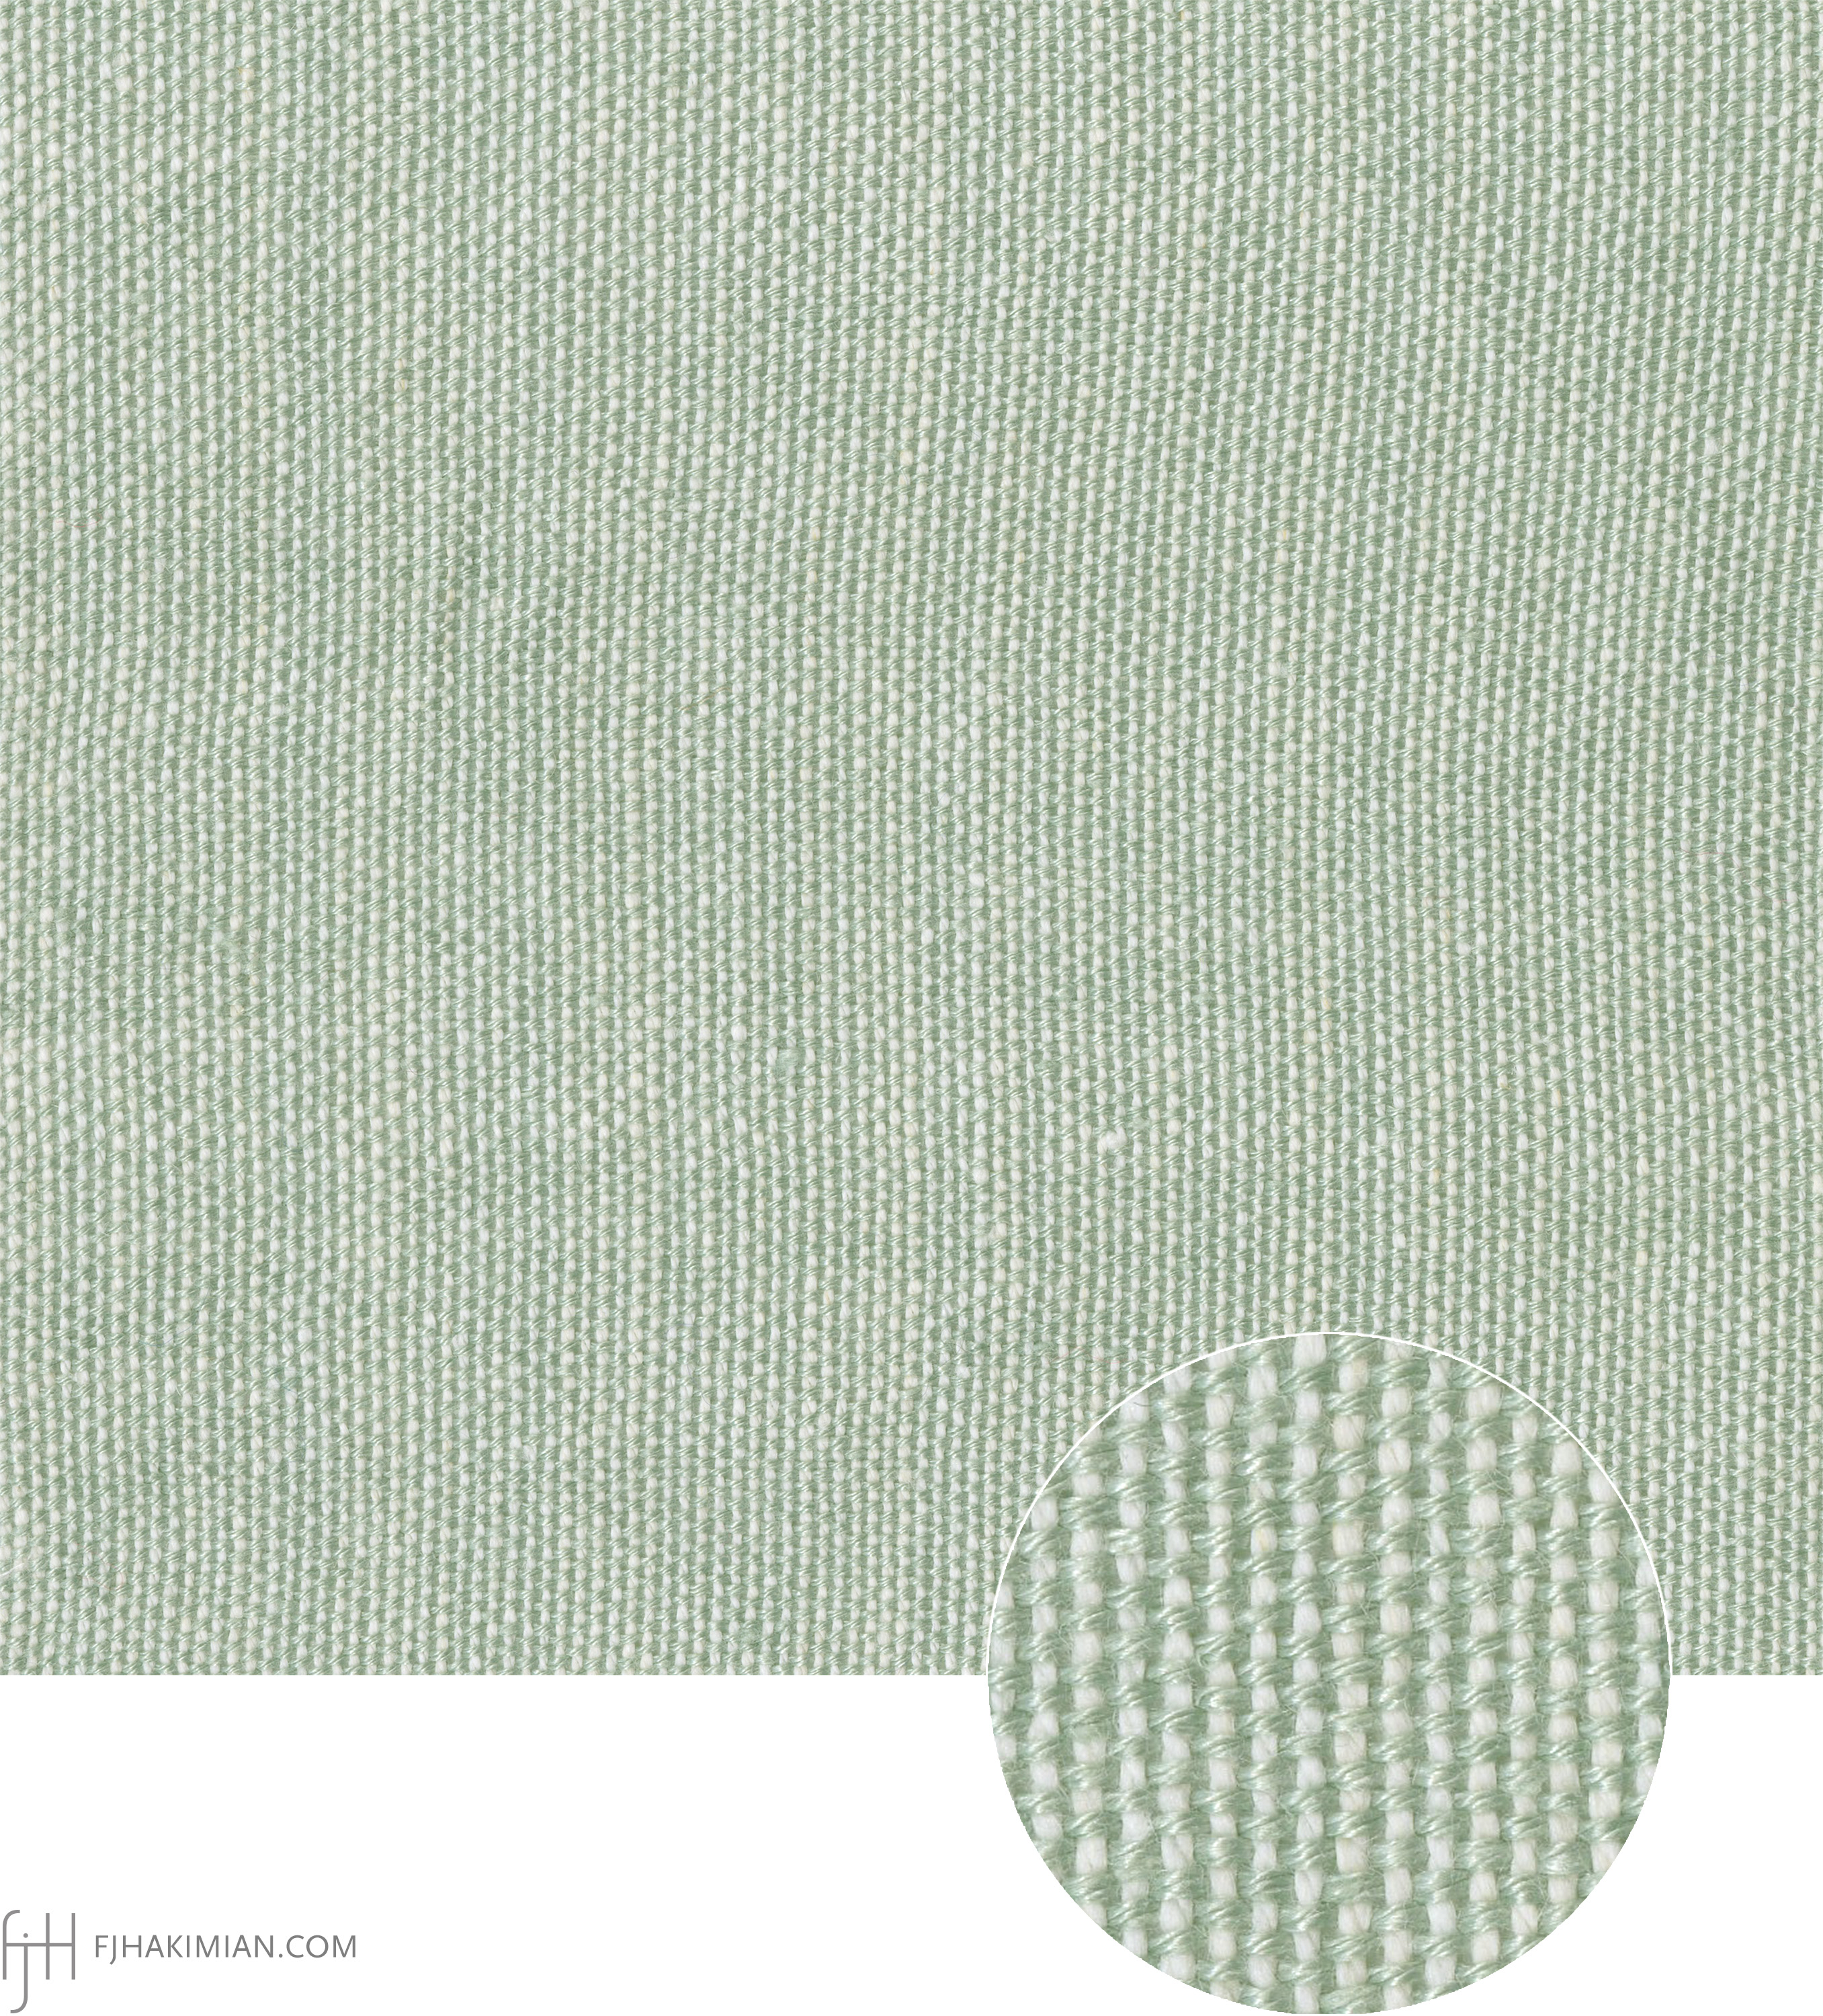 AB-LTLBLV Upholstery Fabric | FJ Hakimian Carpet Gallery, New York 